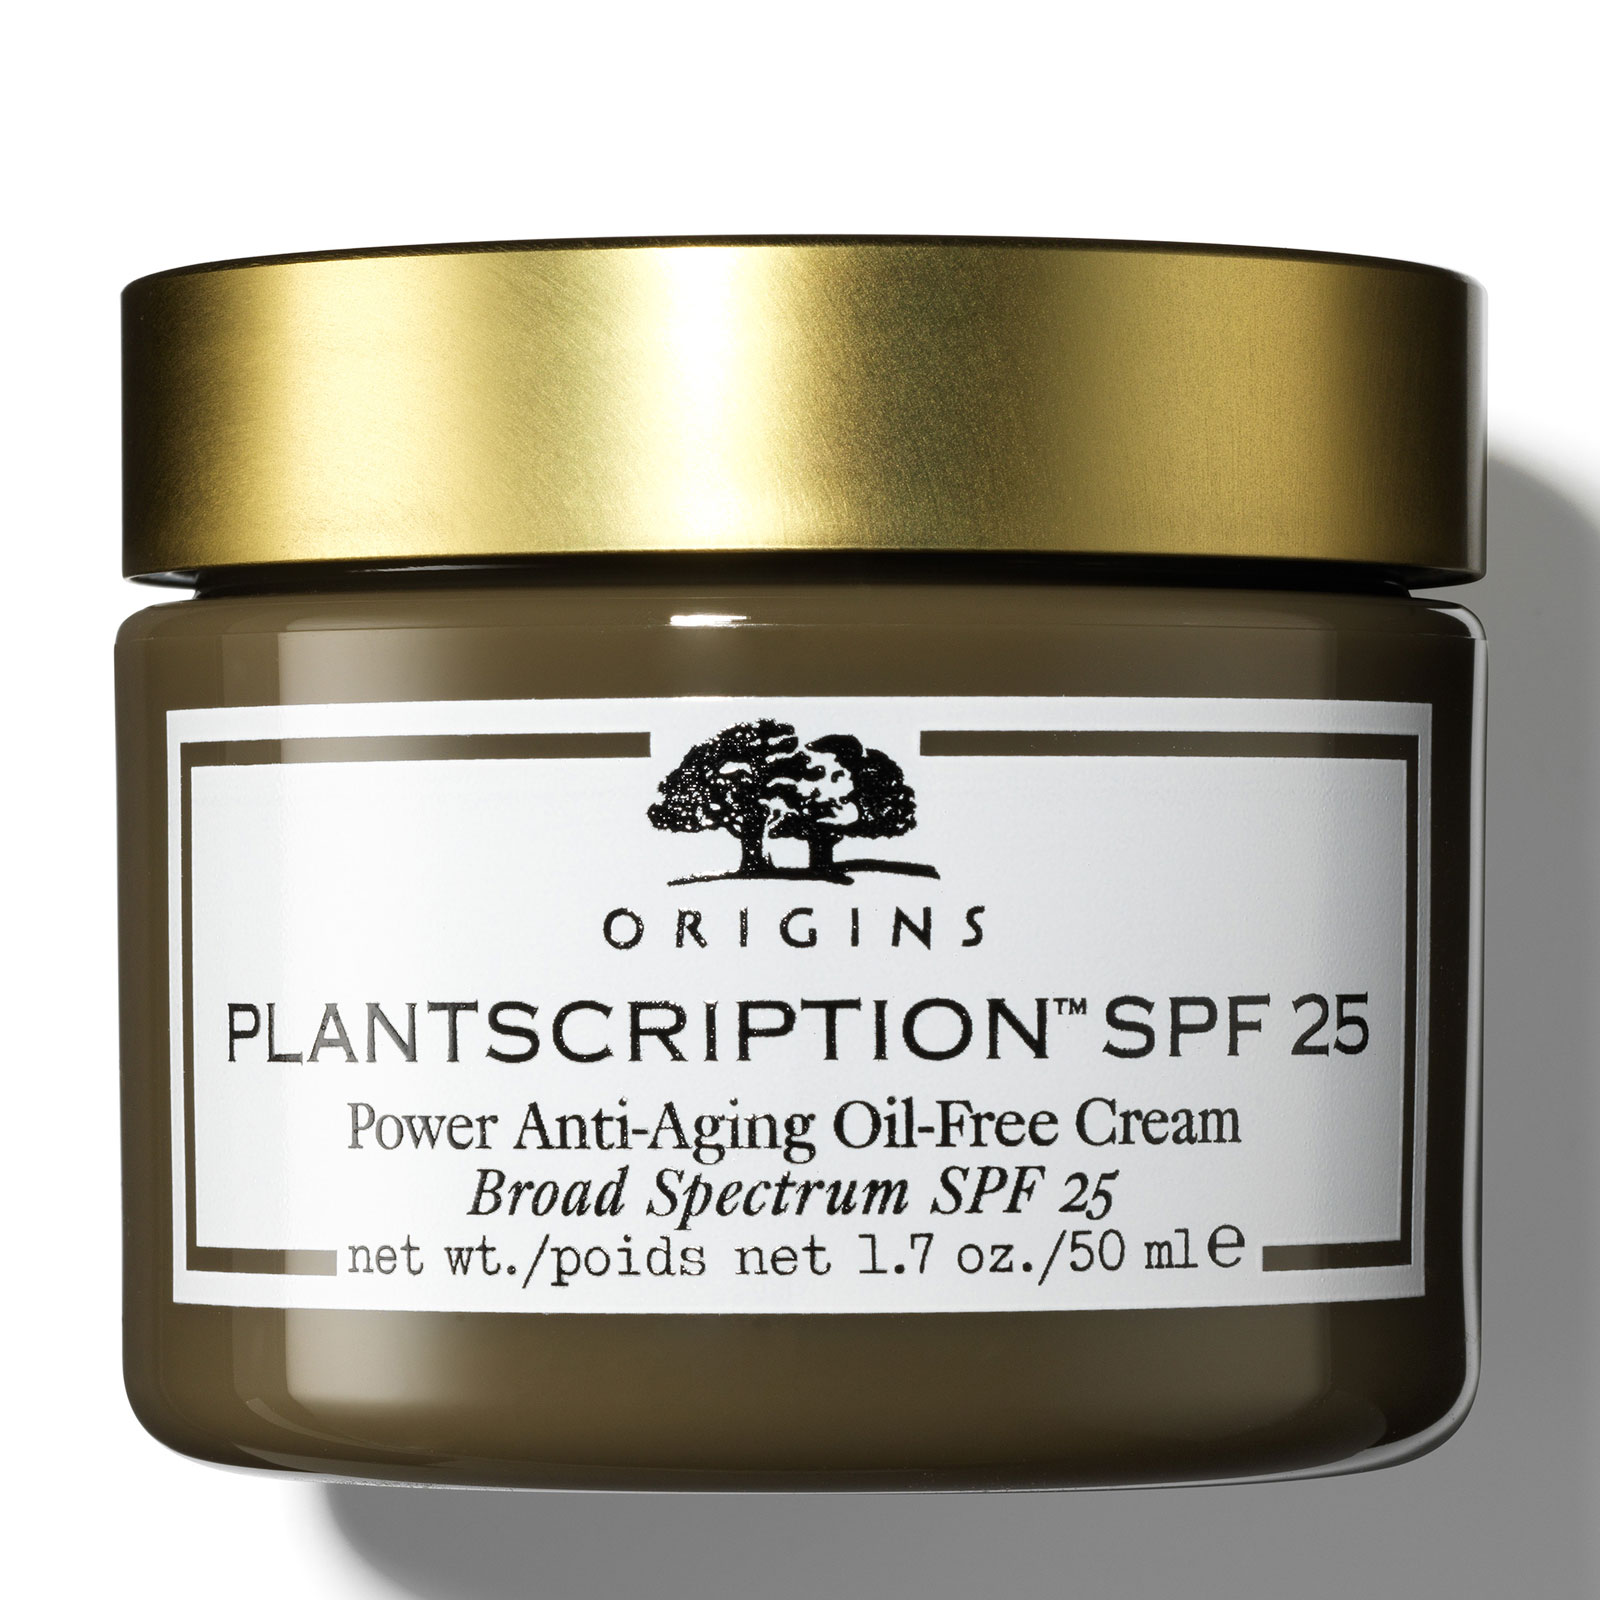 Origins Plantscription Spf25 Power Anti-Aging Oil-Free Cream 50Ml